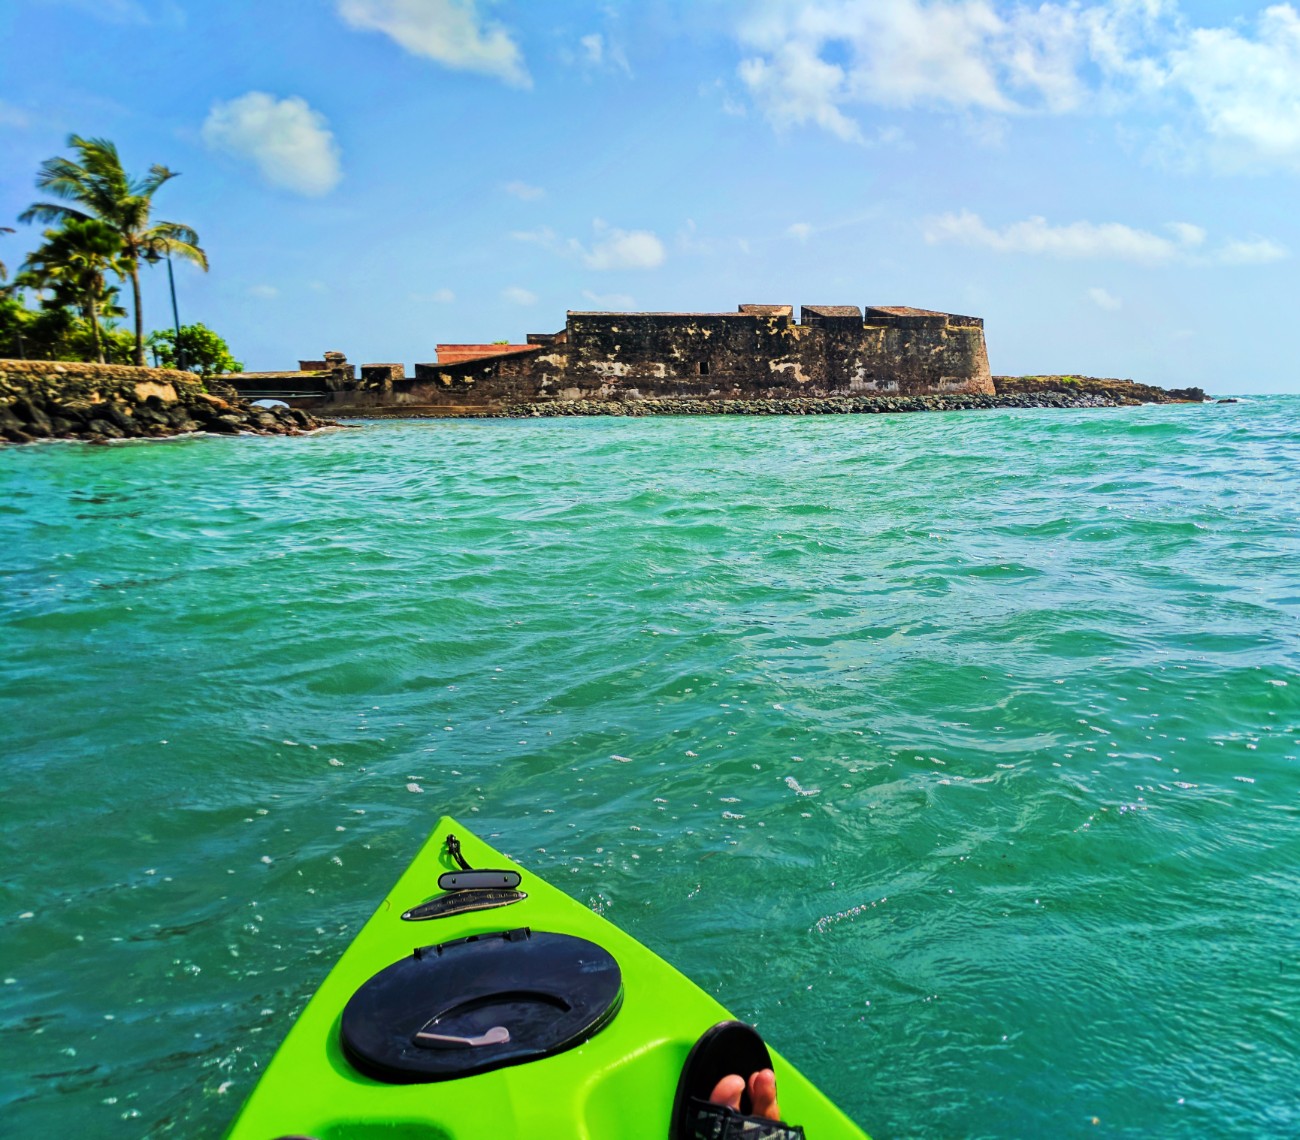 Fortin de San Geronimo from Kayaking Laguna Condado San Juan Puerto Rico 2